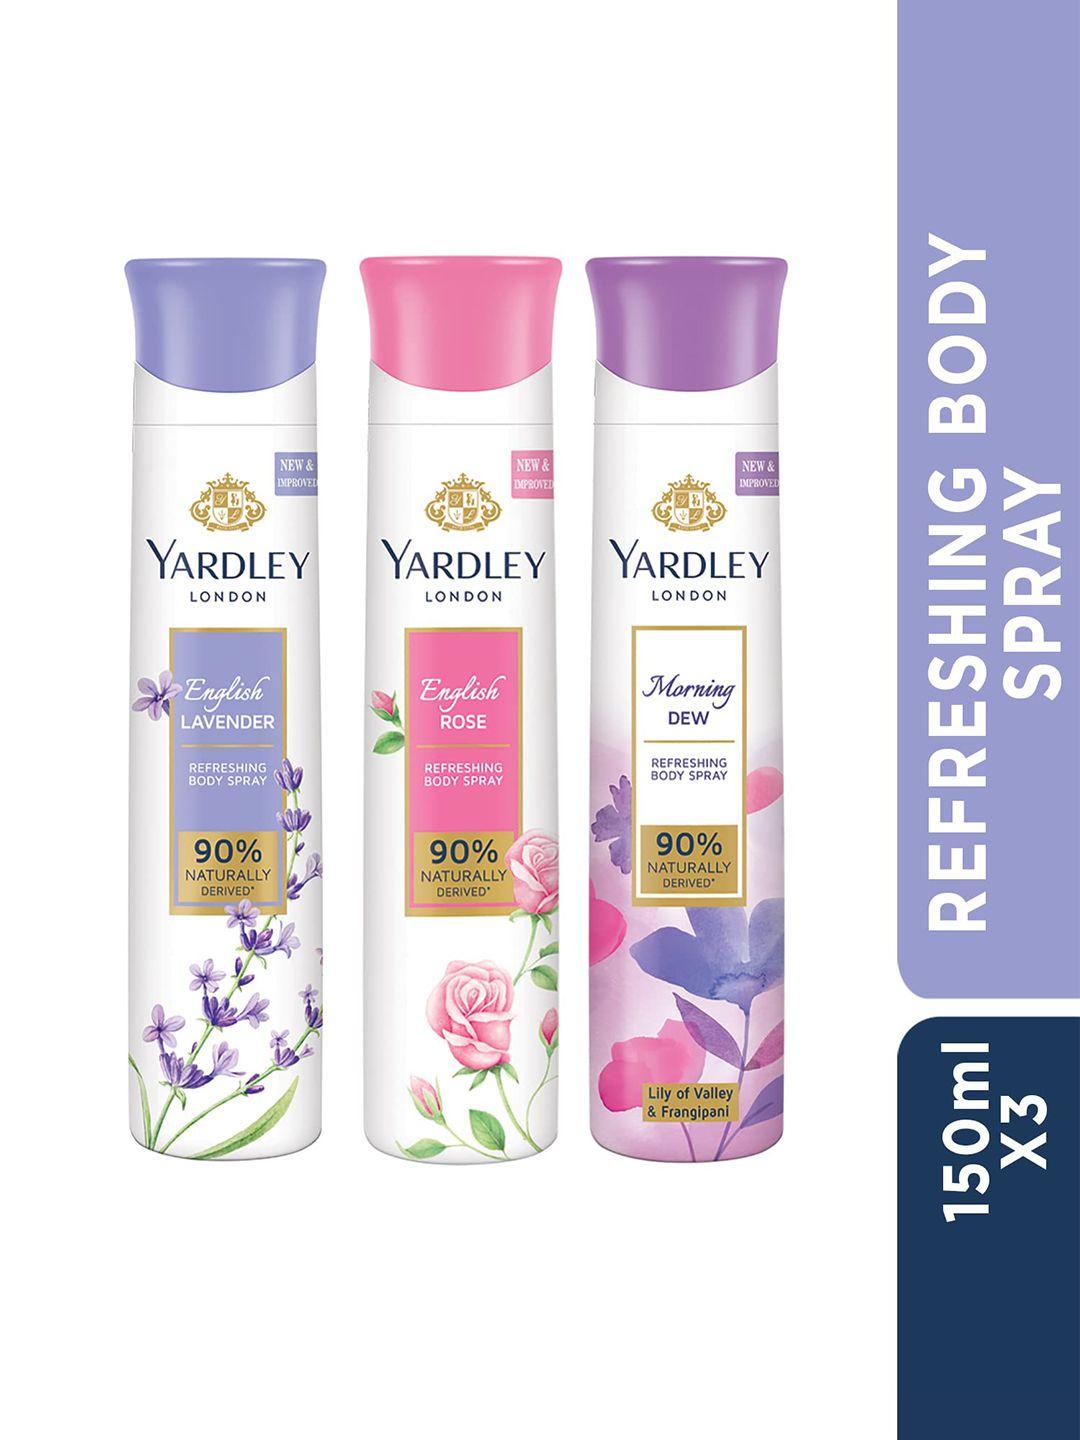 yardley london set of 2 refreshing body sprays - english lavender - english rose - morning dew - 150 ml each